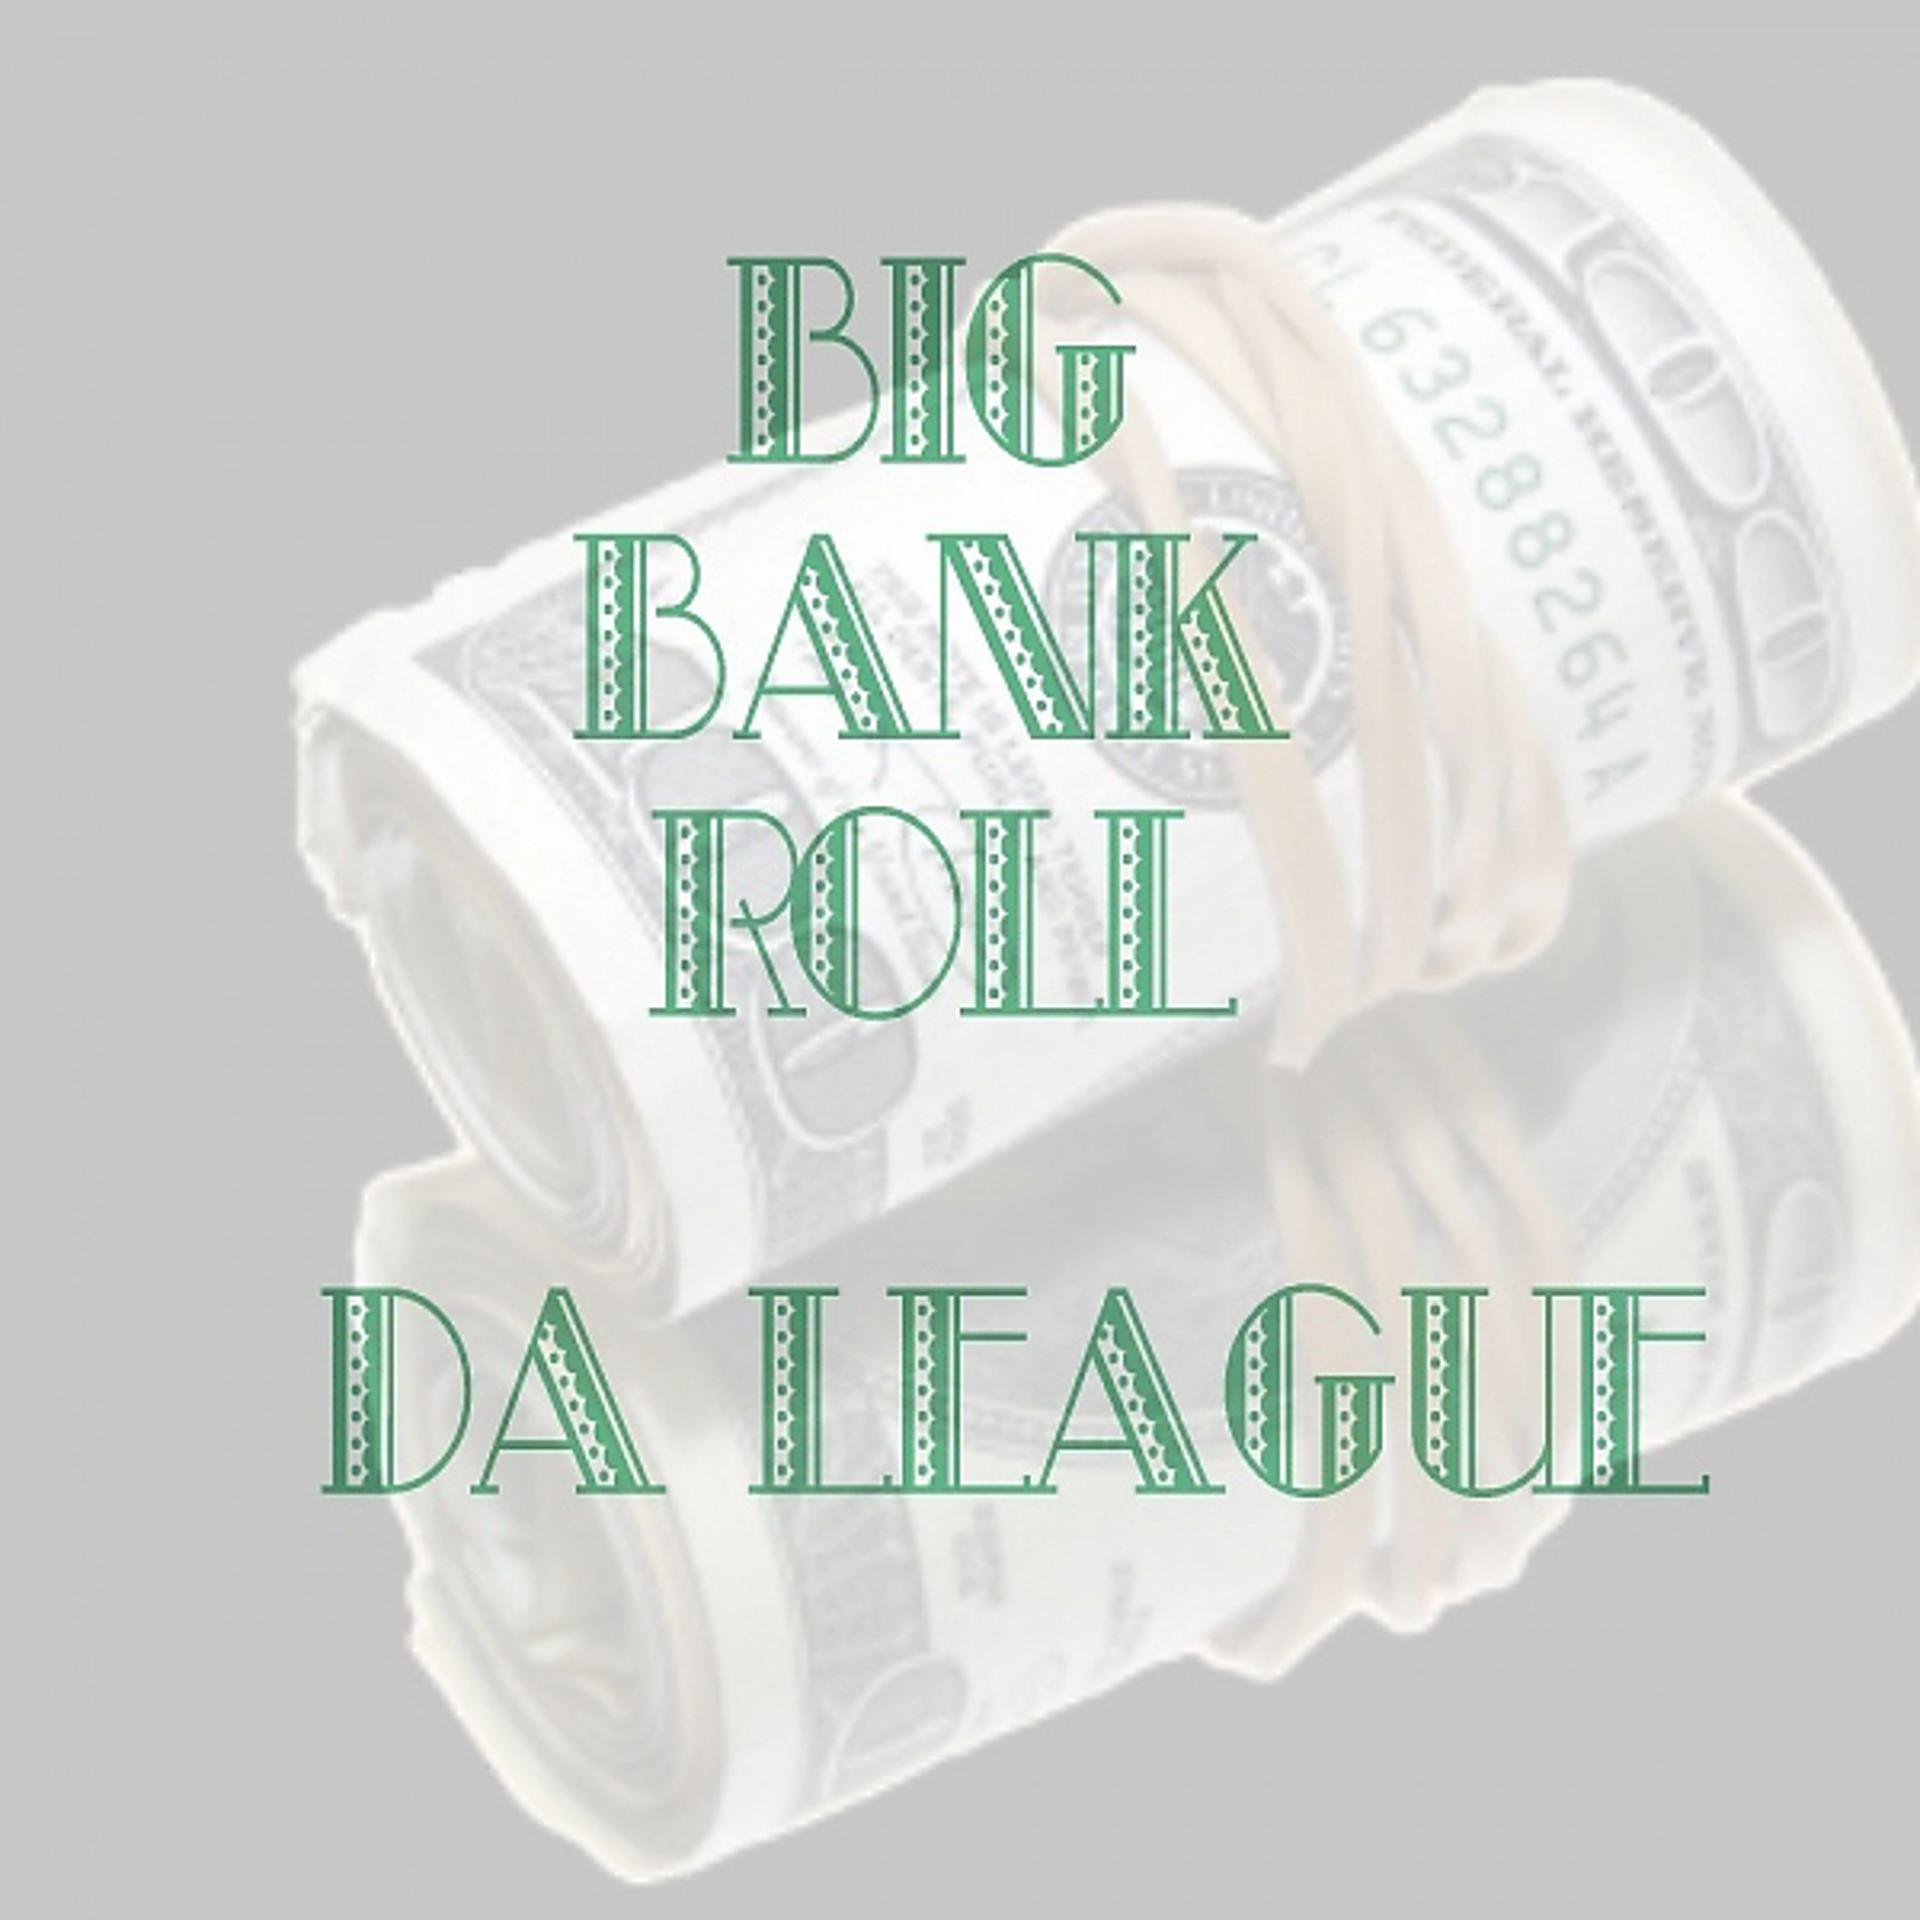 Постер альбома Big Bank Roll